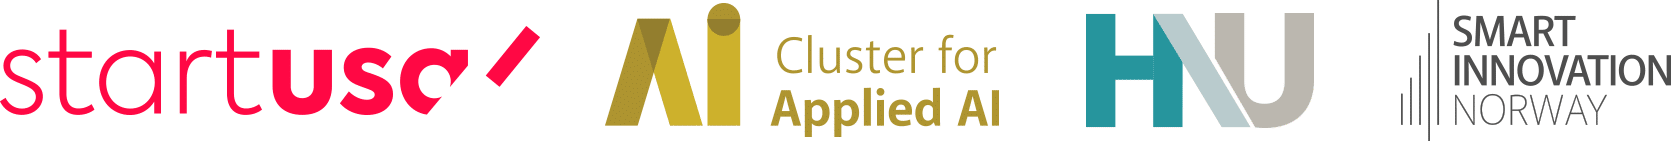 StartUSA, Cluster for Applied AI, Halden Næringsutvikling og Smart Innovation Norway